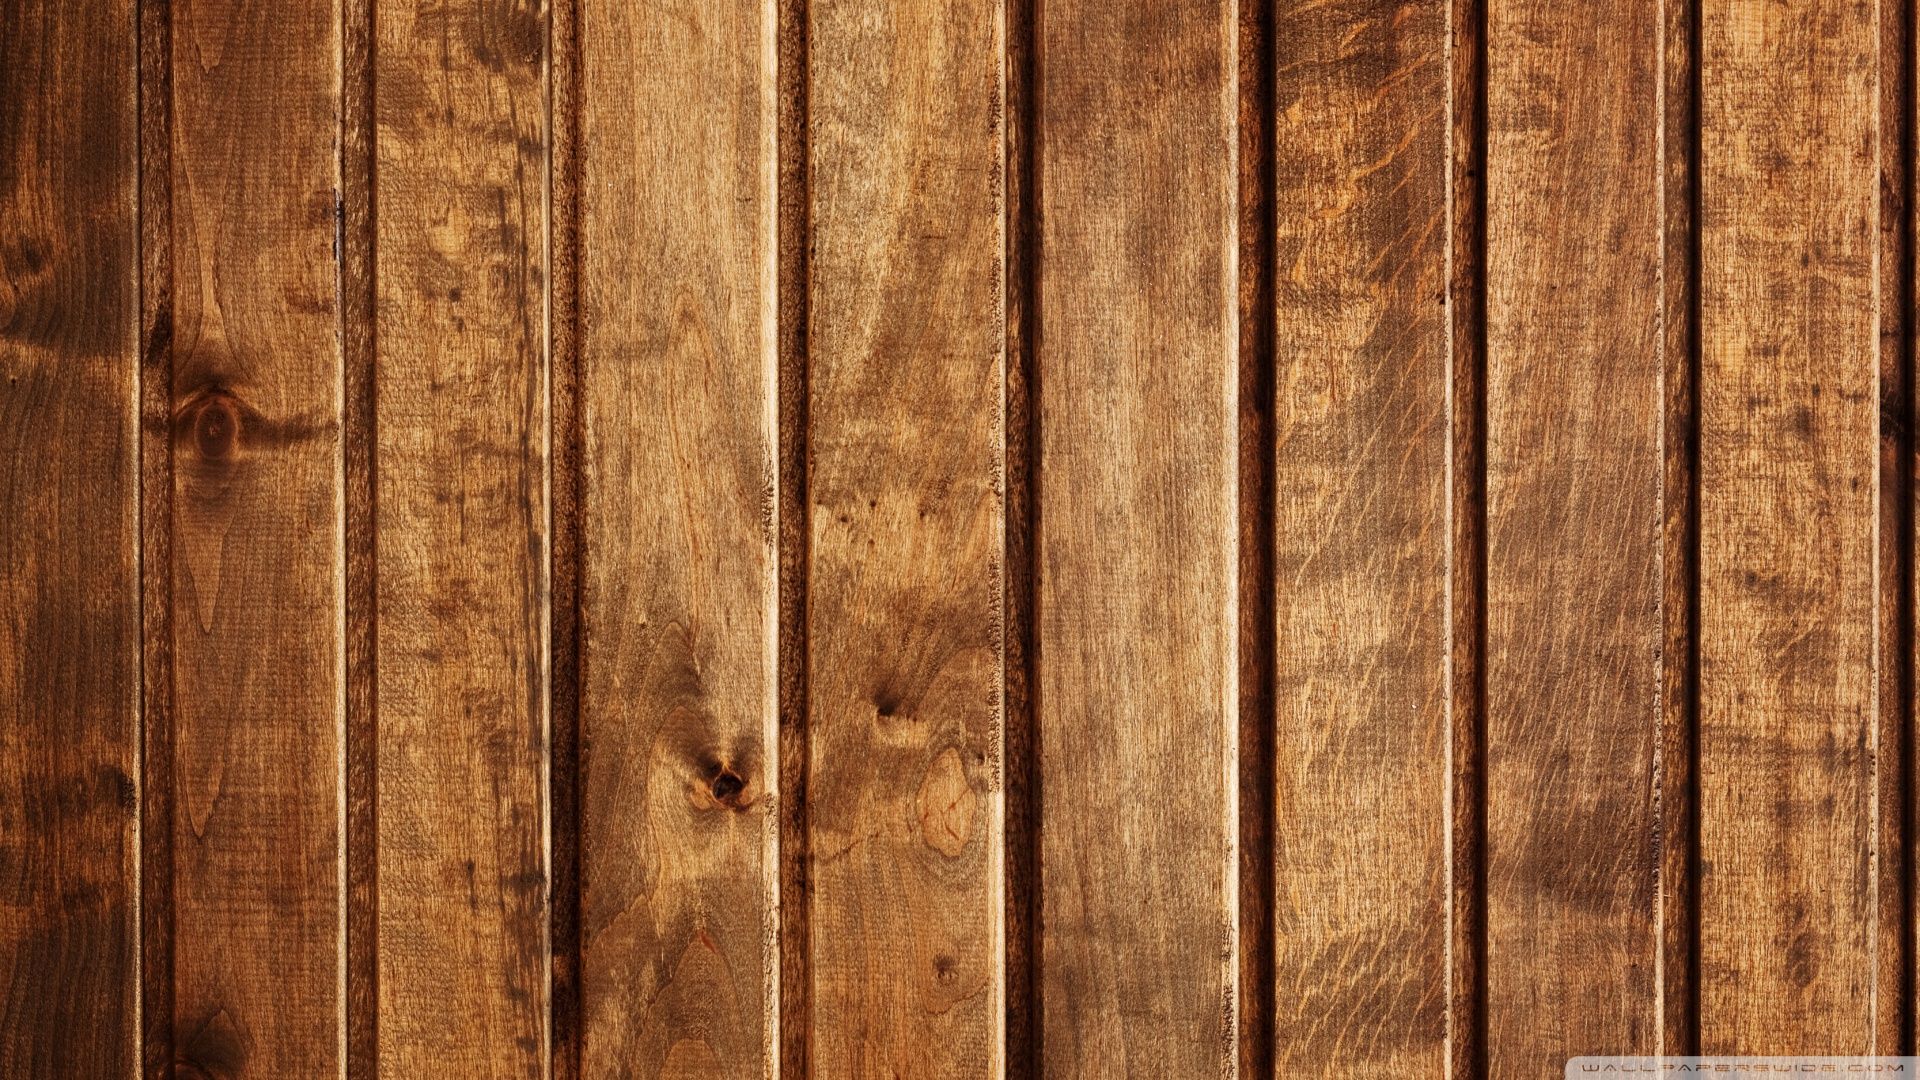 1920x1080 Wood Panels Grain Background.